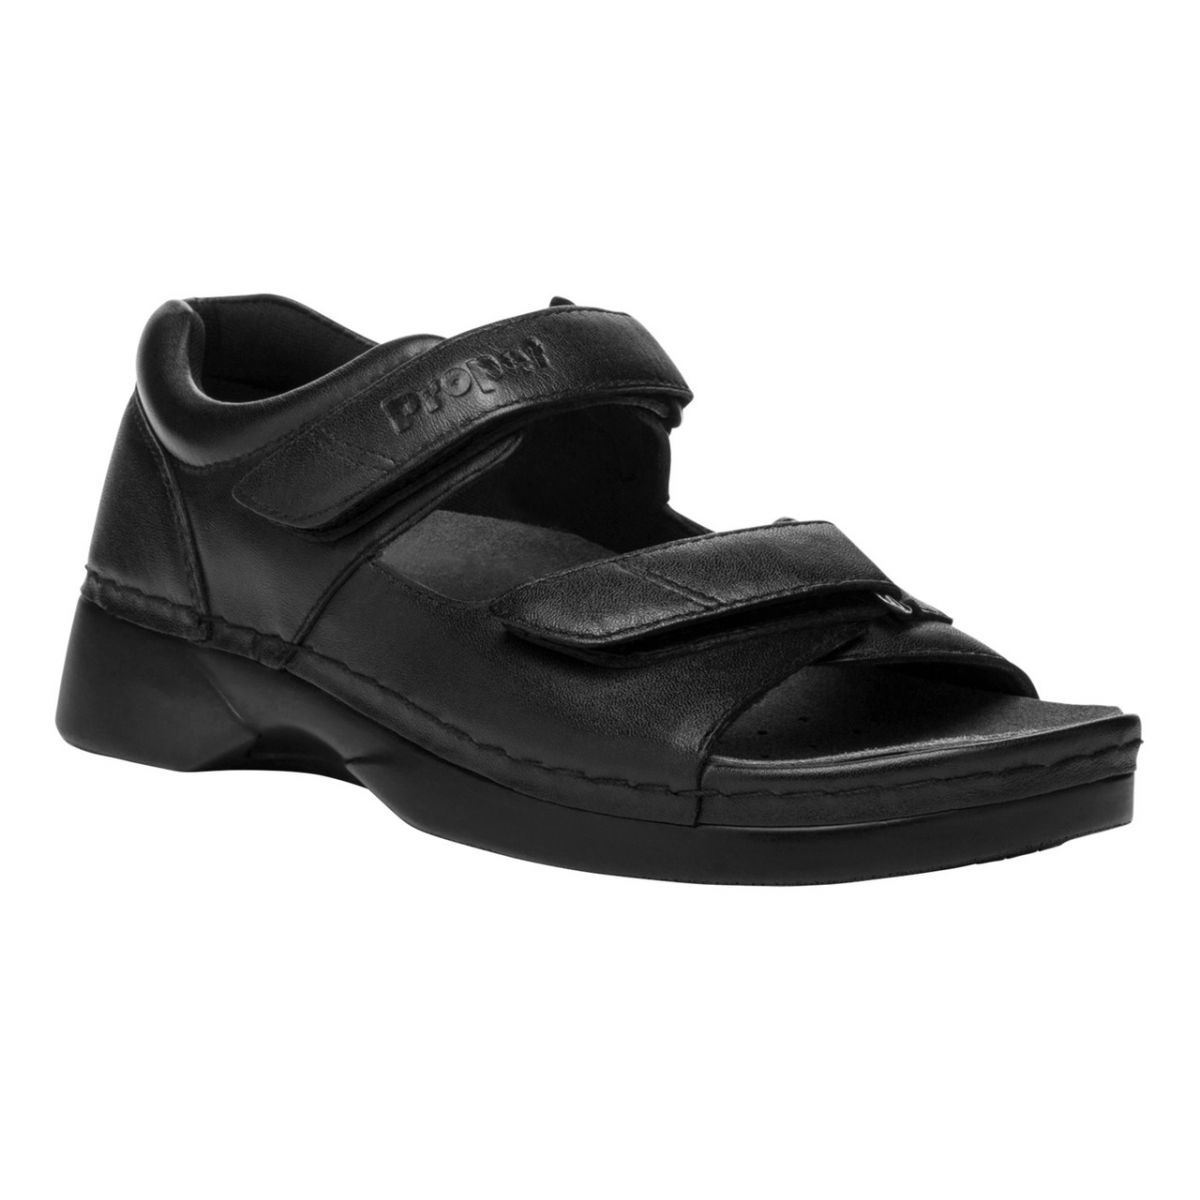 Propet Women's Pedic Walker Sandal Black - W0089B BLACK - BLACK, 7.5 X-Wide